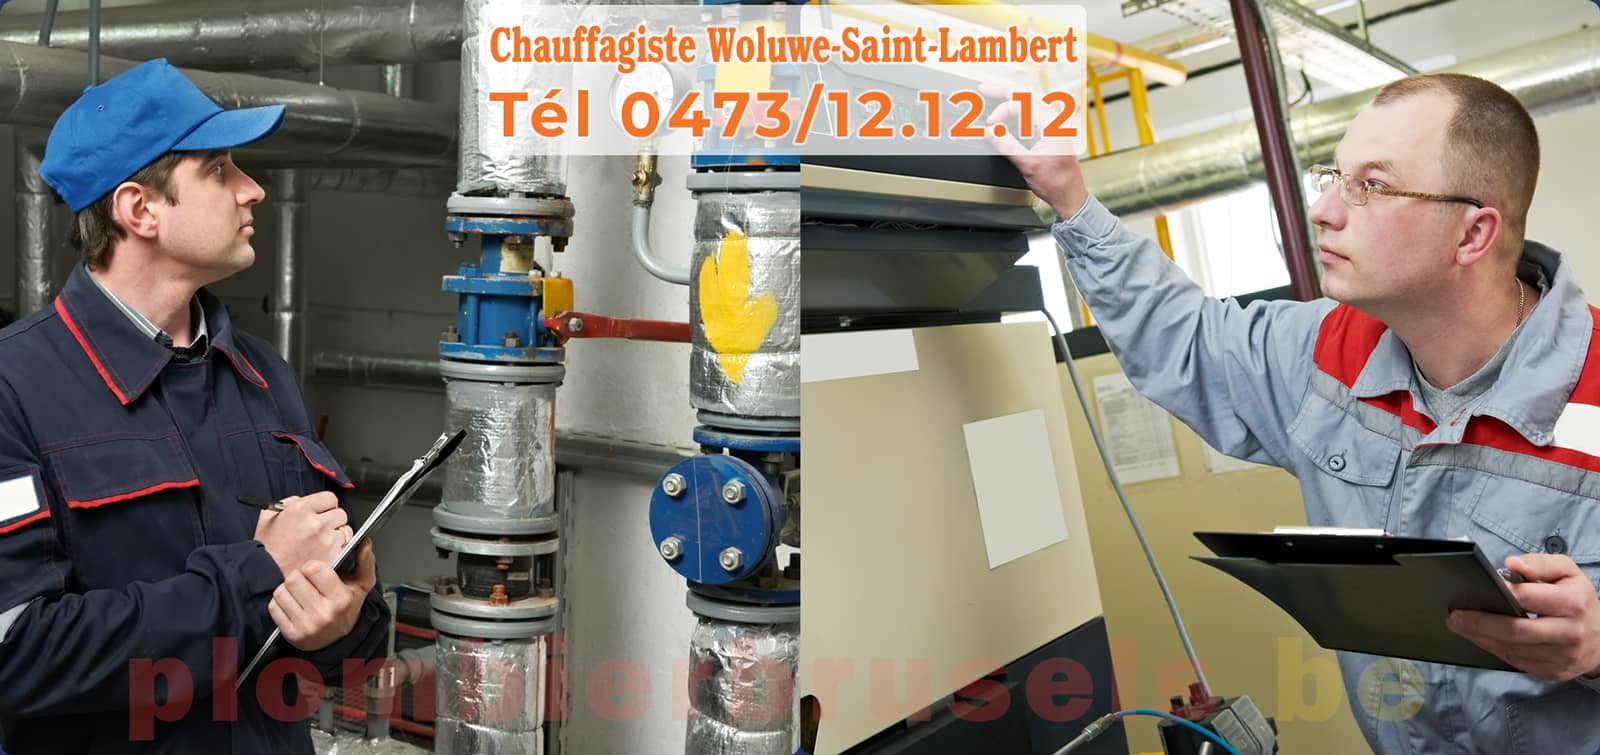 Chauffagiste Woluwe-Saint-Lambert service de Chauffage tél 0473/12.12.12